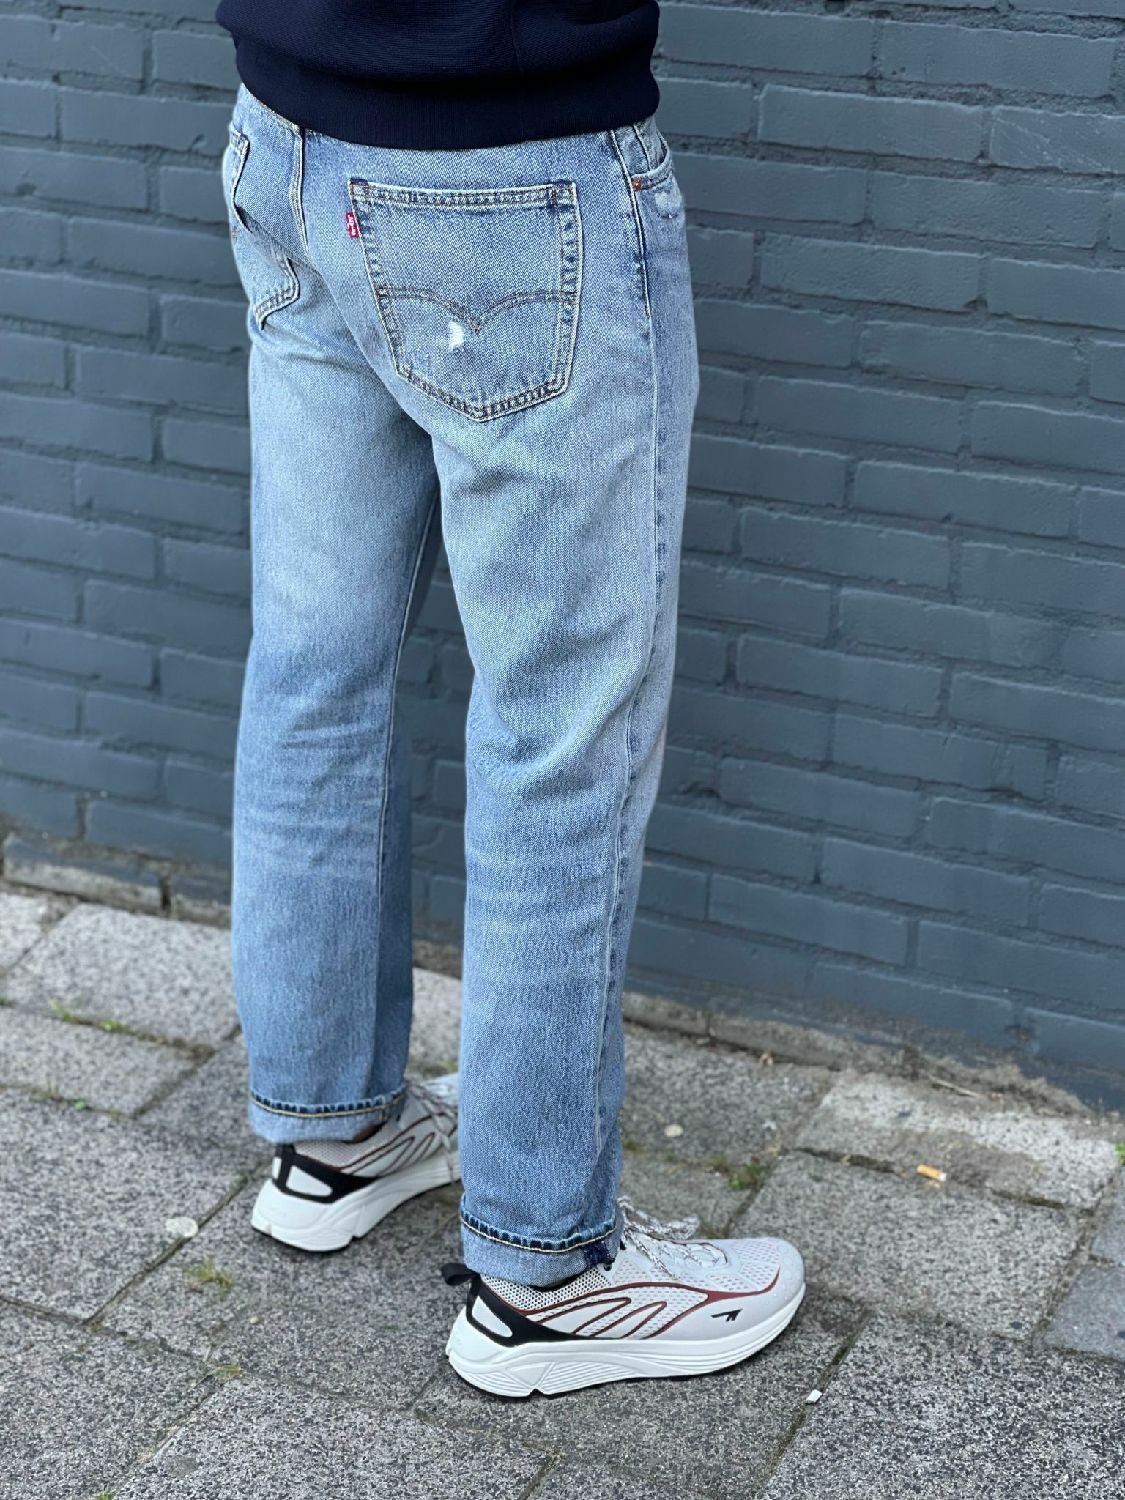 in de buurt calorie wiel Levi's heren jeans 551 Authentic straight Hula online kopen bij No Sense.  247670-0040 | Where jeans meet fashion